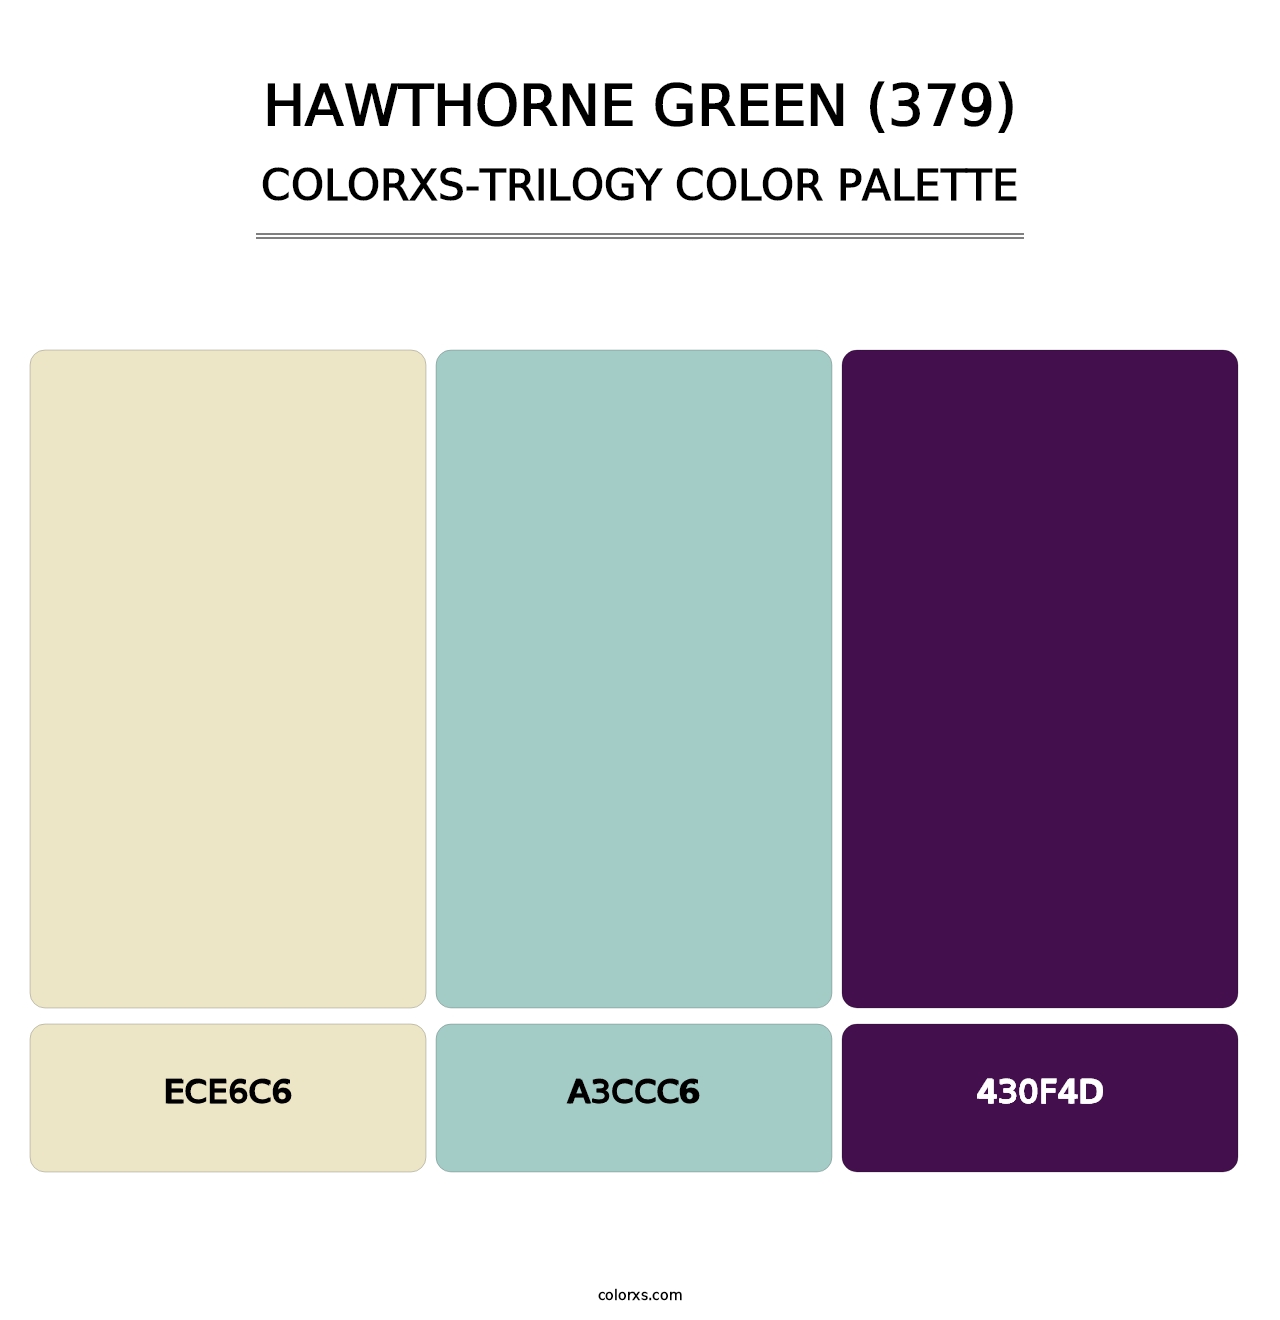 Hawthorne Green (379) - Colorxs Trilogy Palette